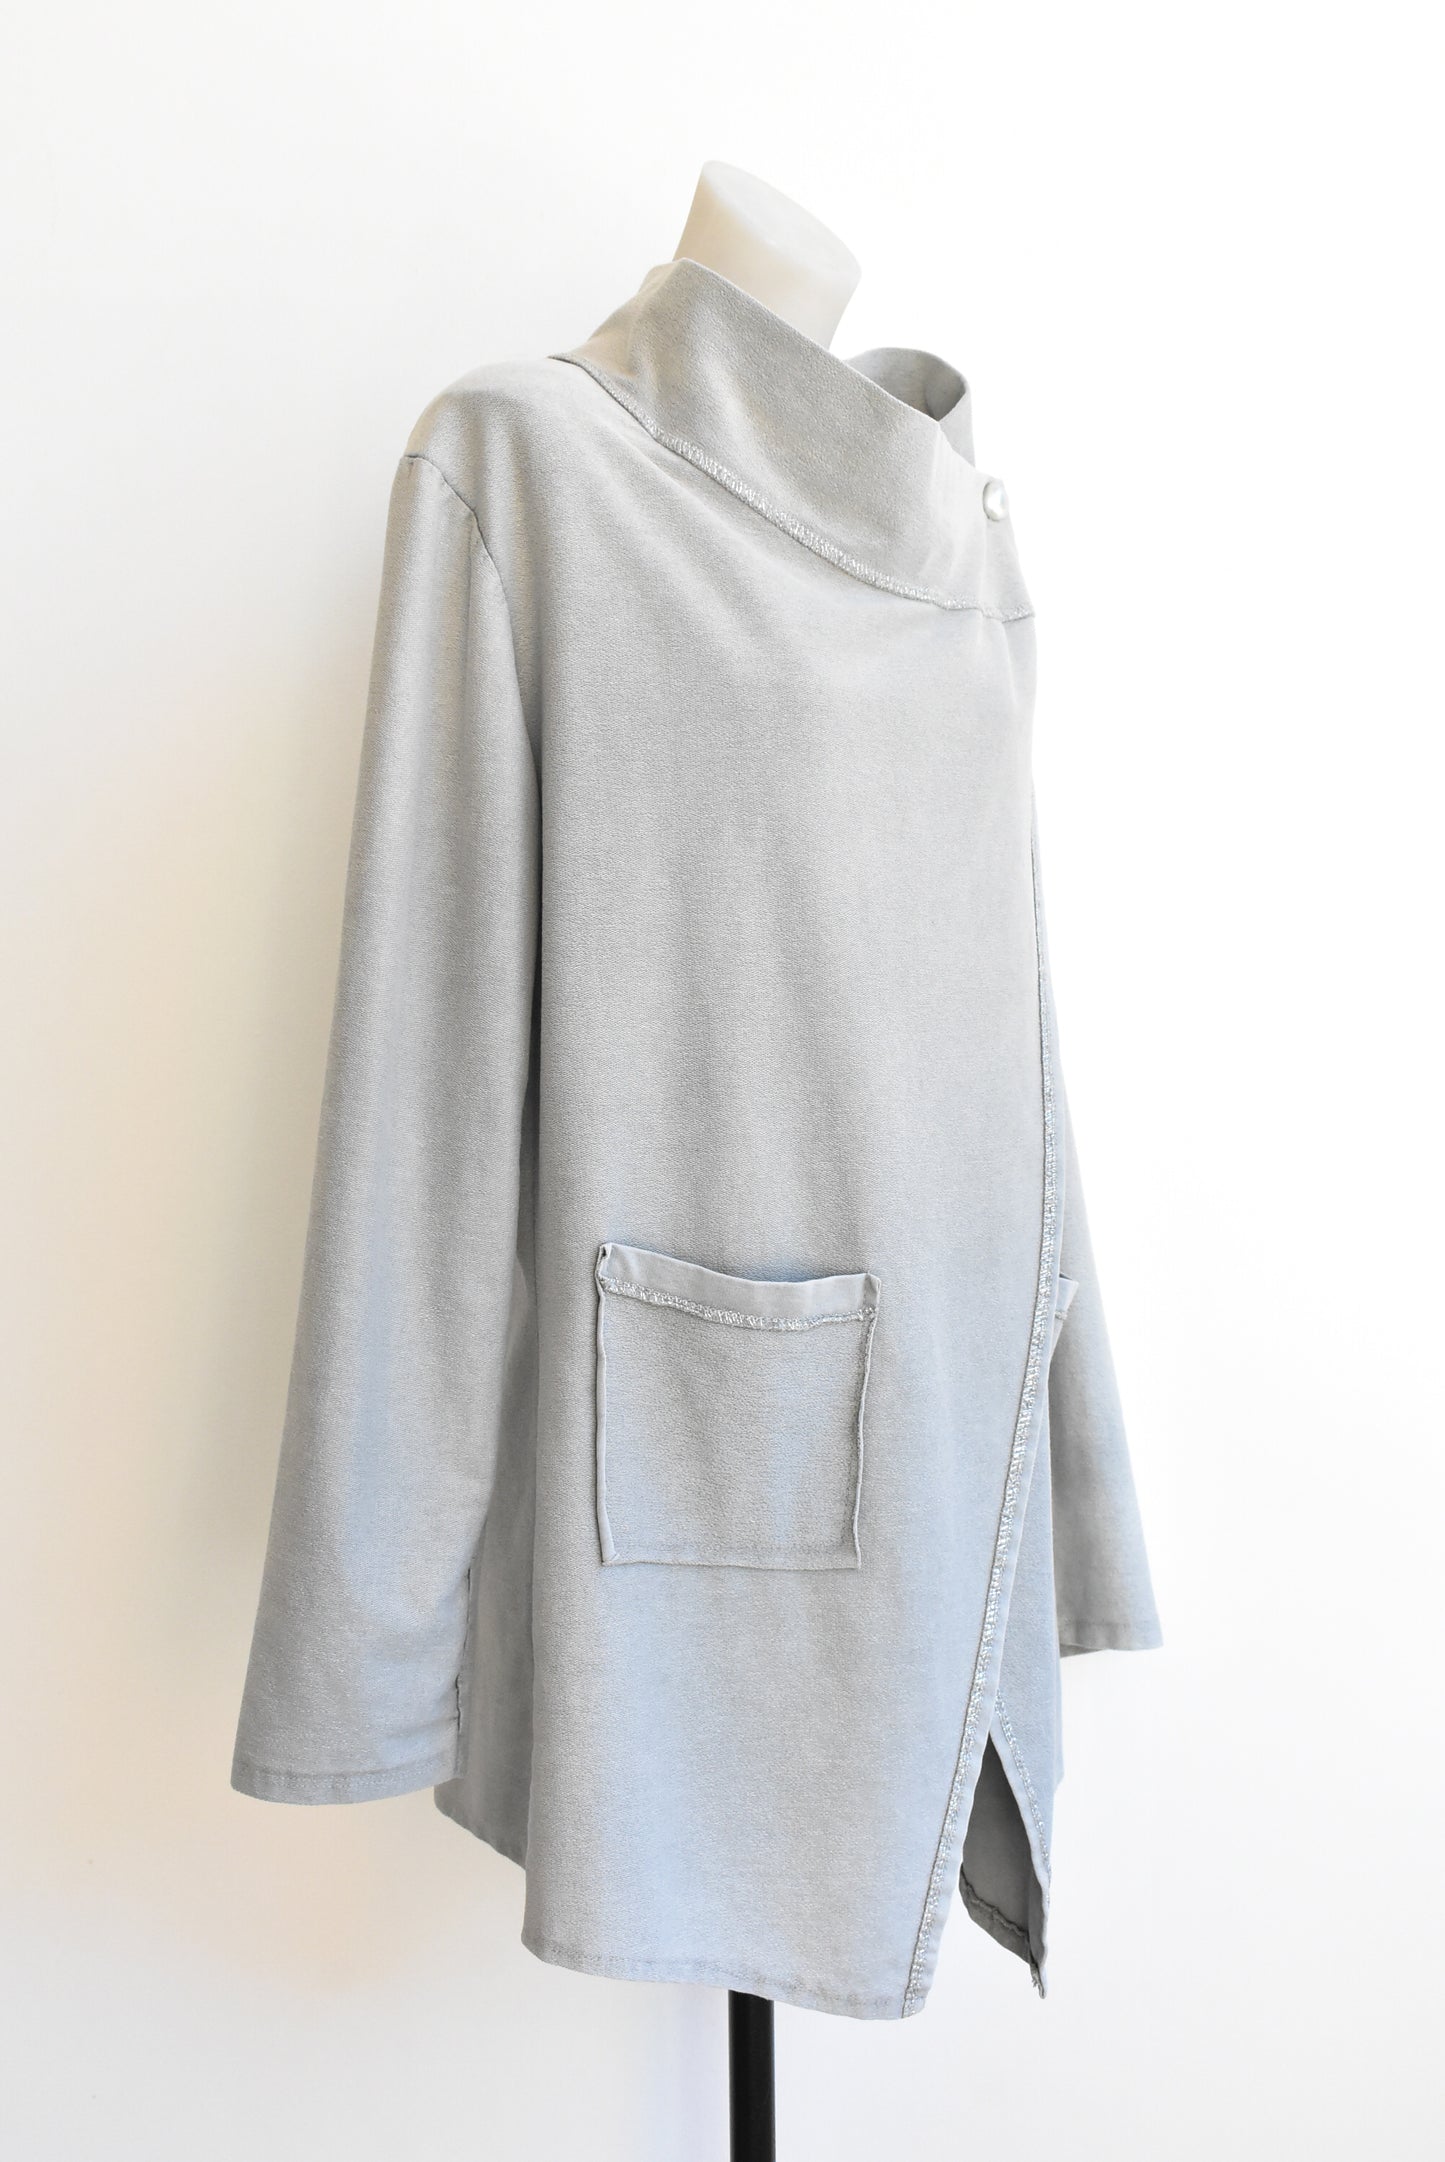 Imagine 100% Italian cotton sweater, size L